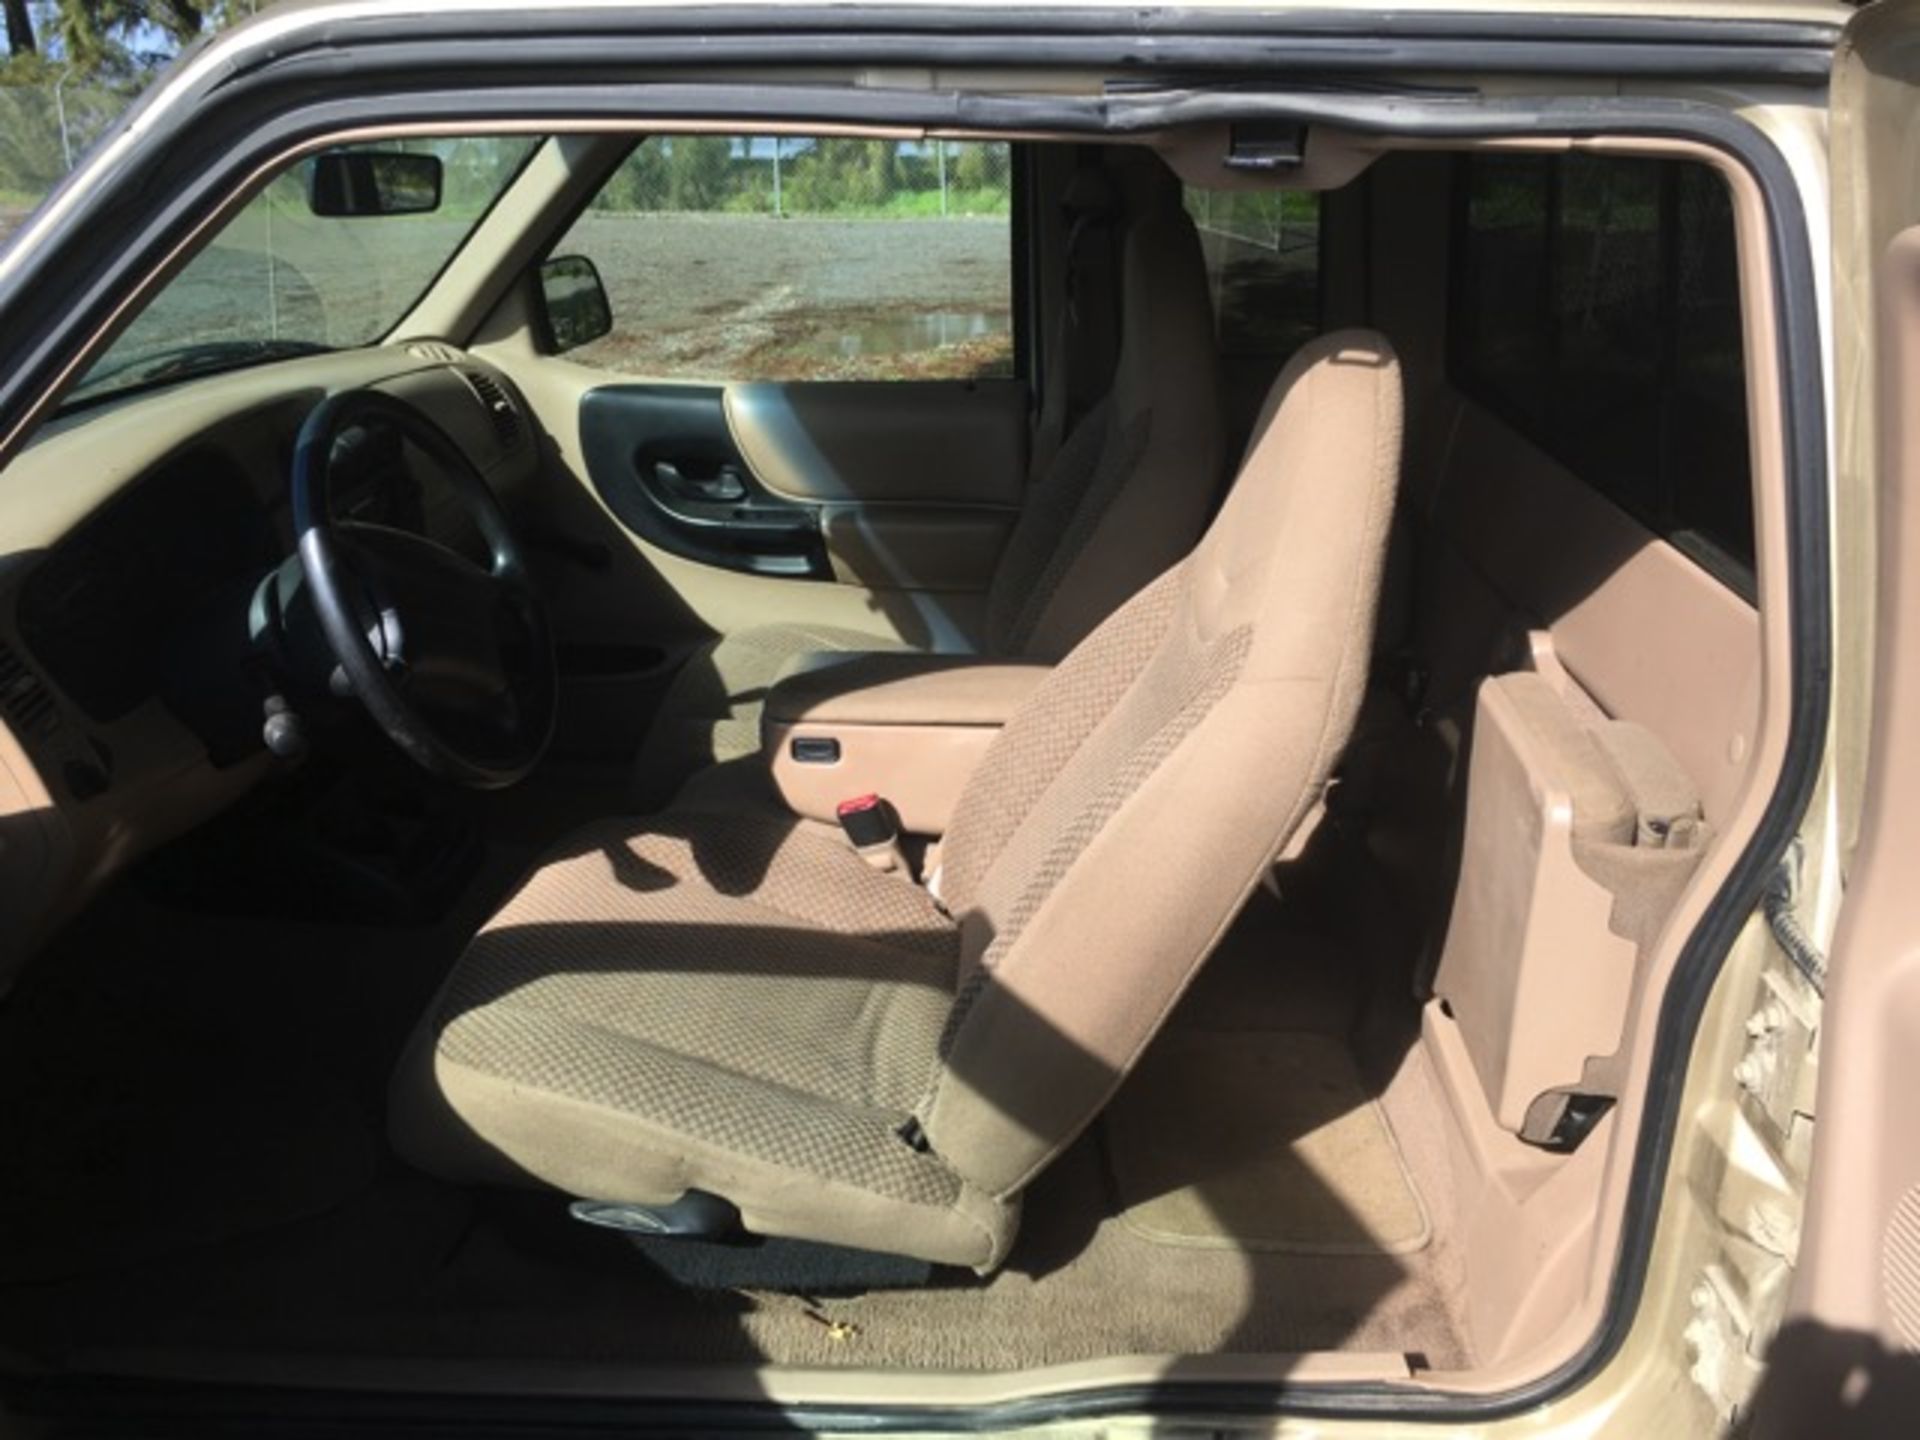 1999 Ford Ranger XLT, Auto Trans, 3.0L V6, 4 Dr Extra Cab W/Jump Seats, Sliding Rear Window, Tint, - Image 8 of 22